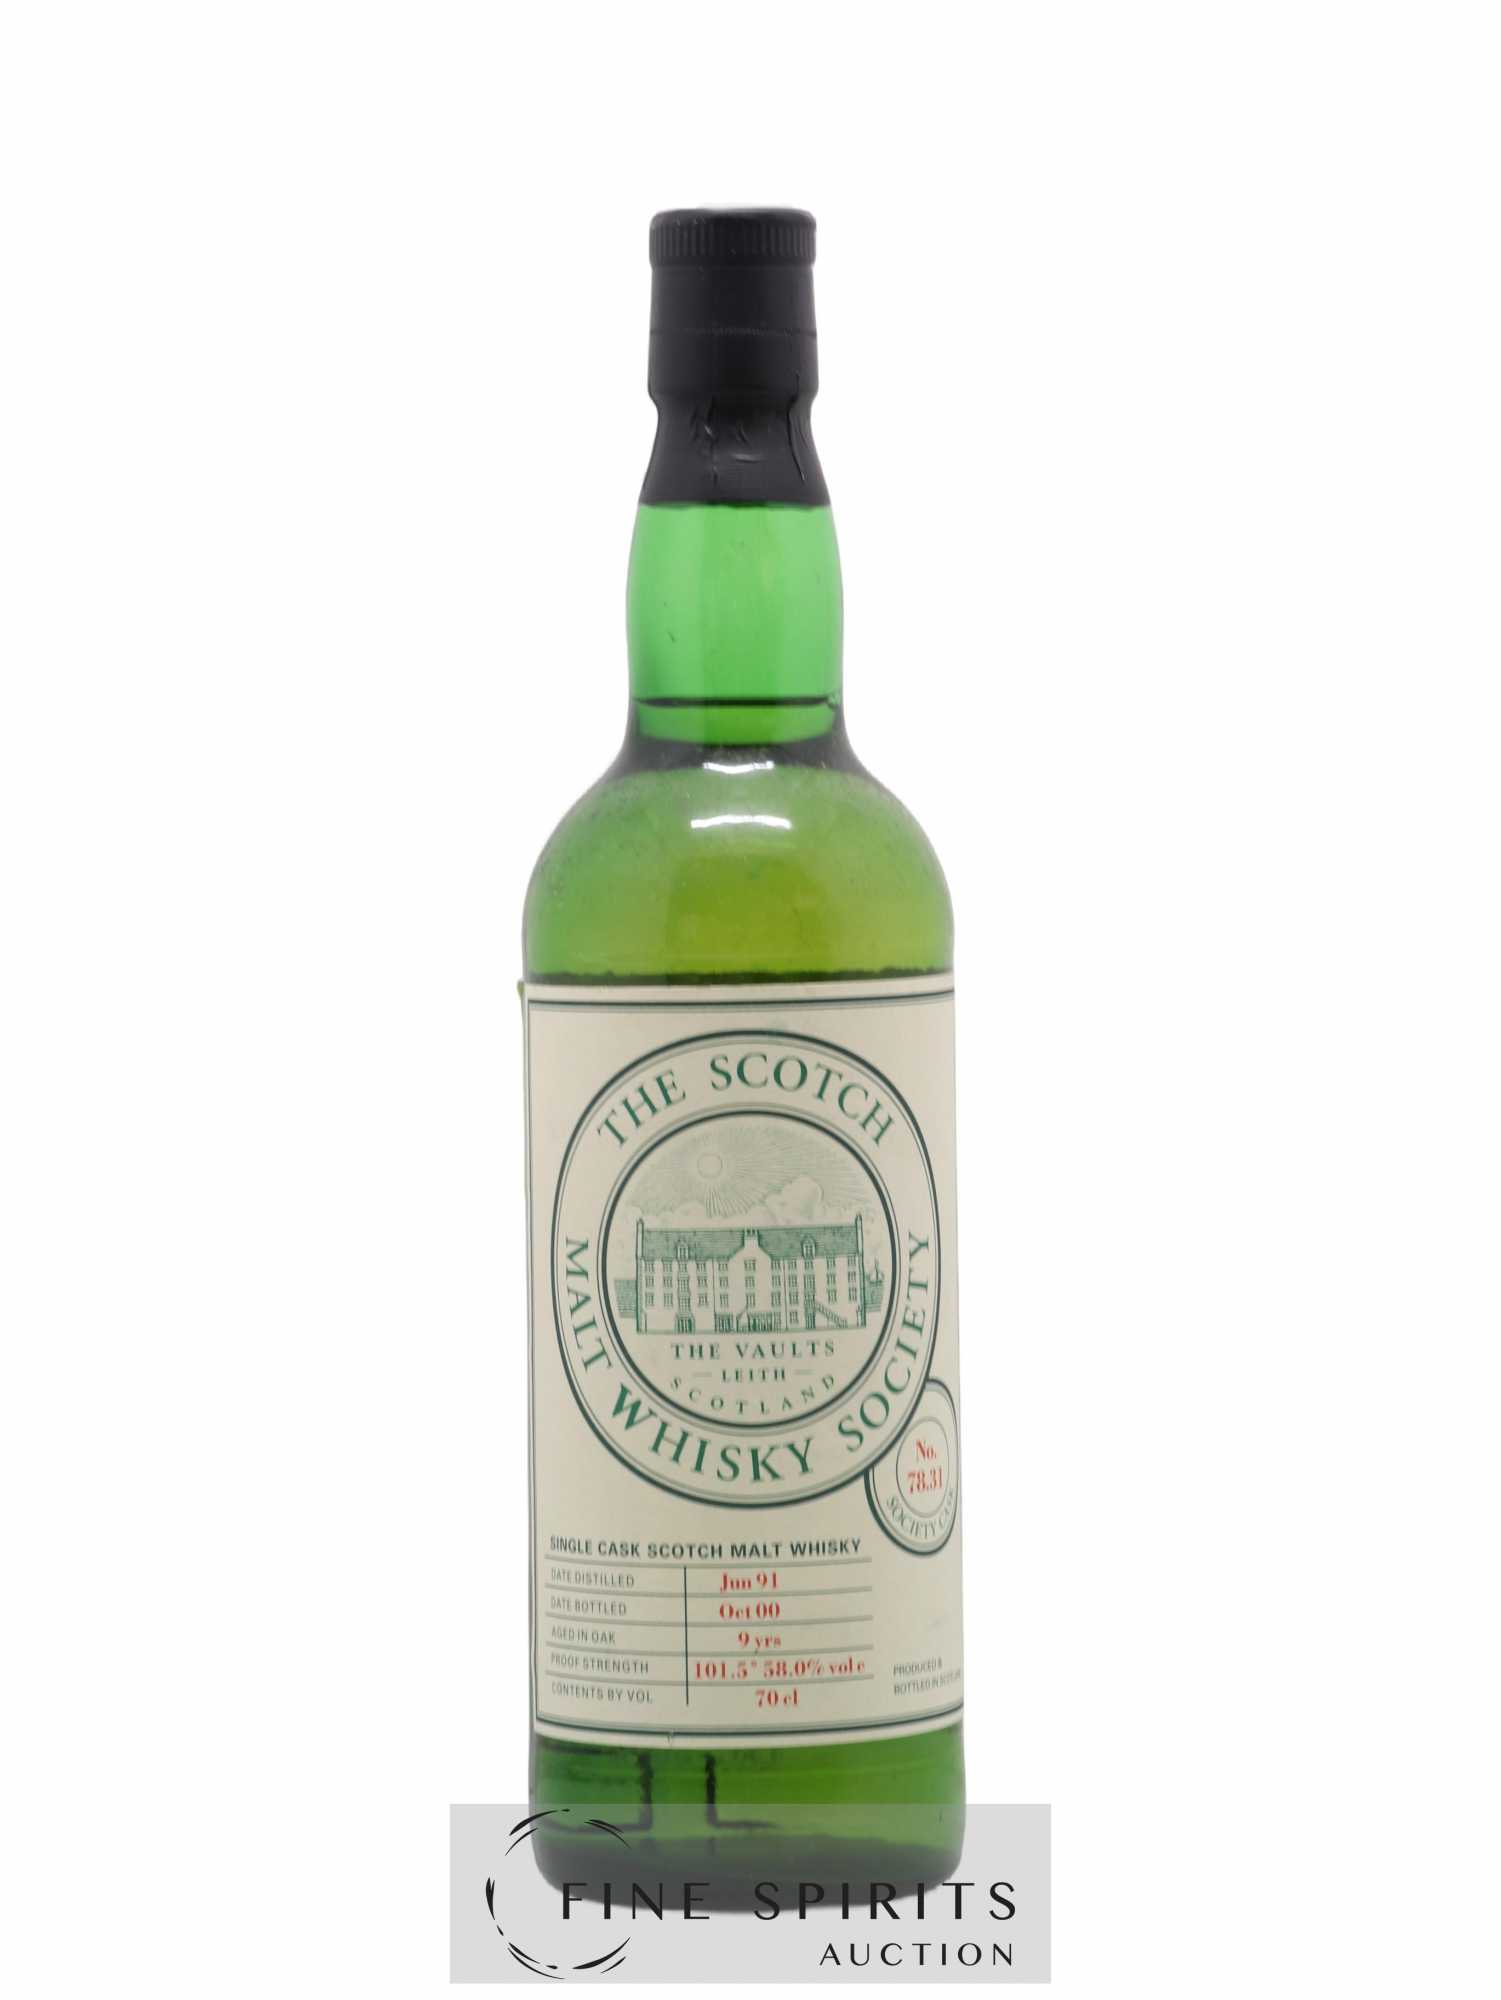 Ben Nevis 9 years 1991 The Scotch Malt Whisky Society Cask n°78.31 - bottled 2000 